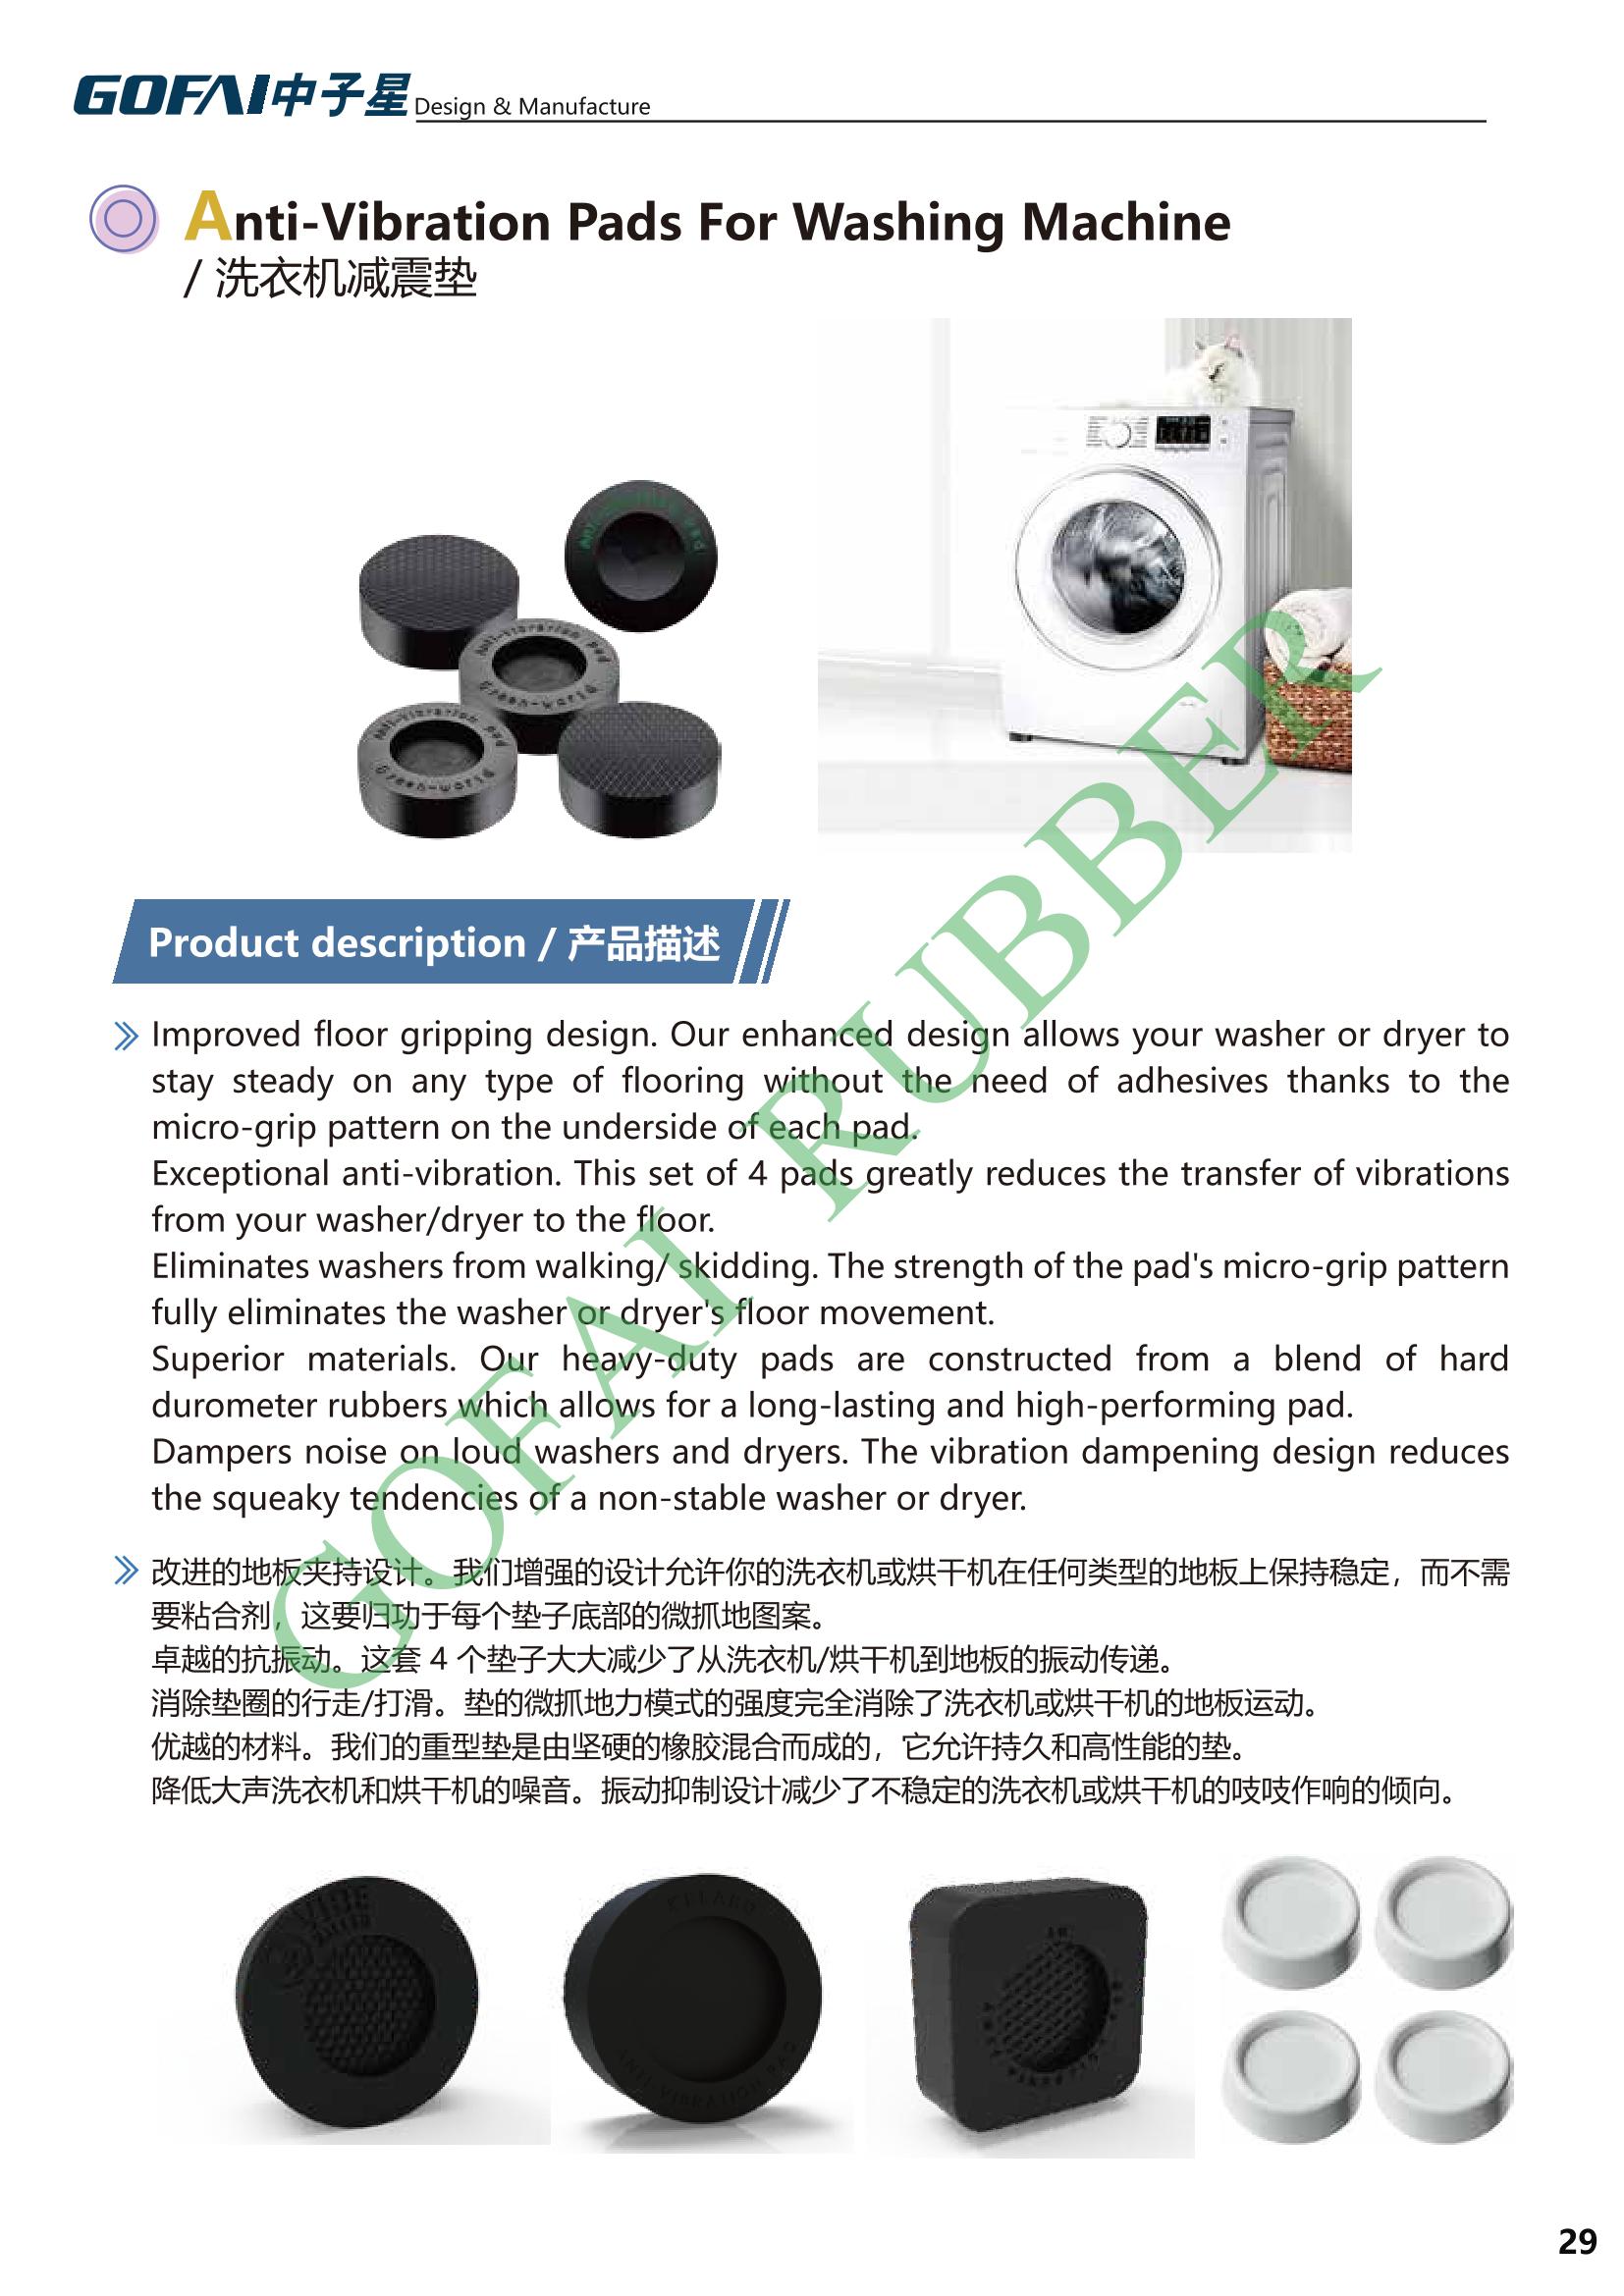 GOFAI rubberplastic products cataloge_29.jpg